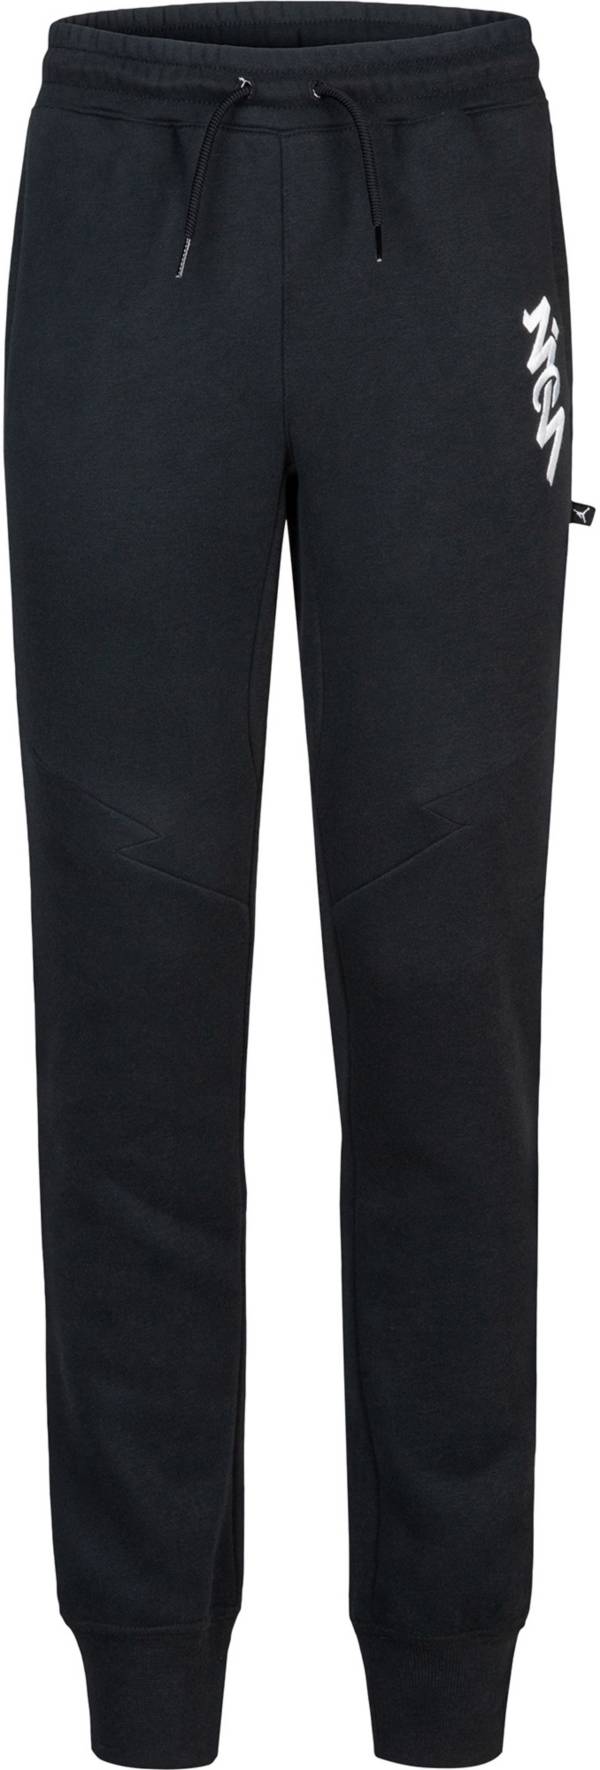 Jordan Boys' Zion Fleece Pants product image